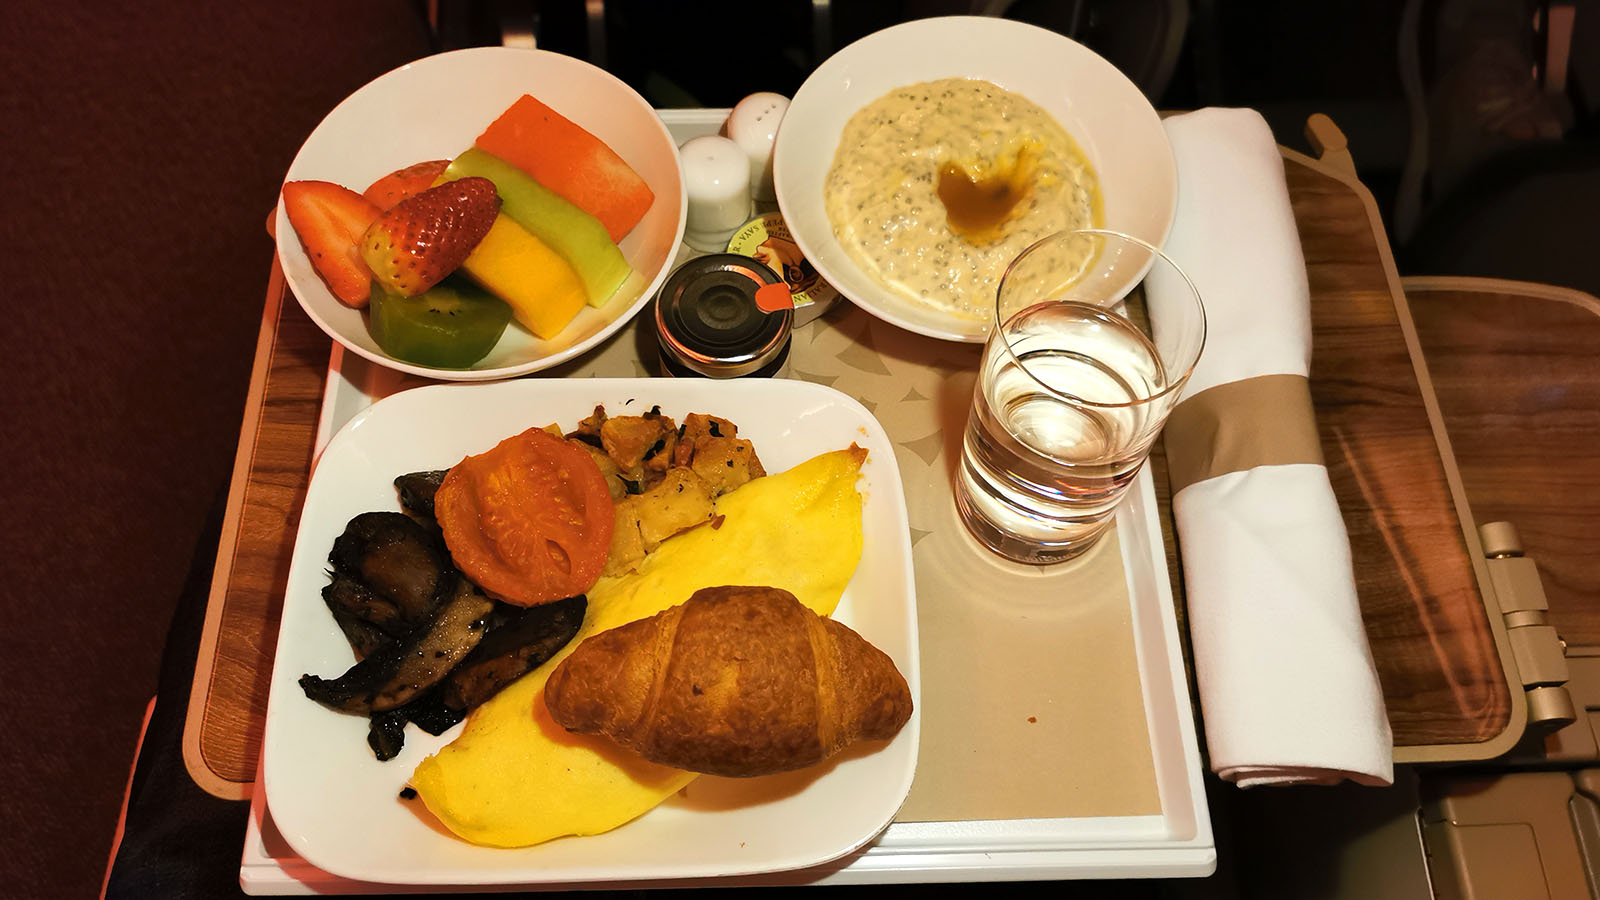 Morning meal in Emirates Airbus A380 Premium Economy